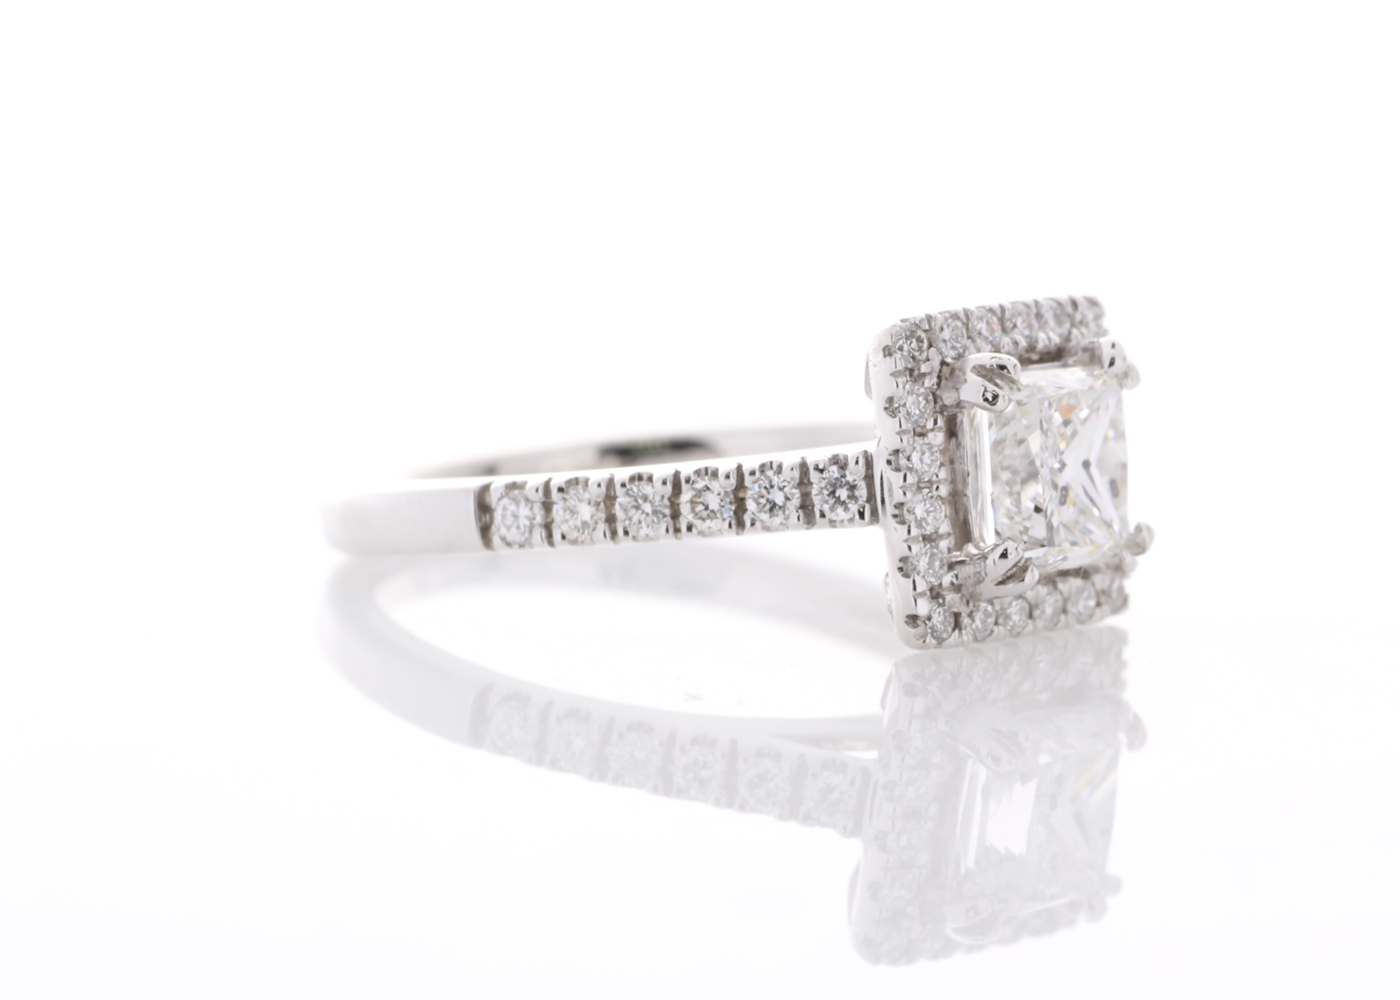 18ct White Gold Princess Cut Diamond Ring 1.34 Carats - Image 4 of 5